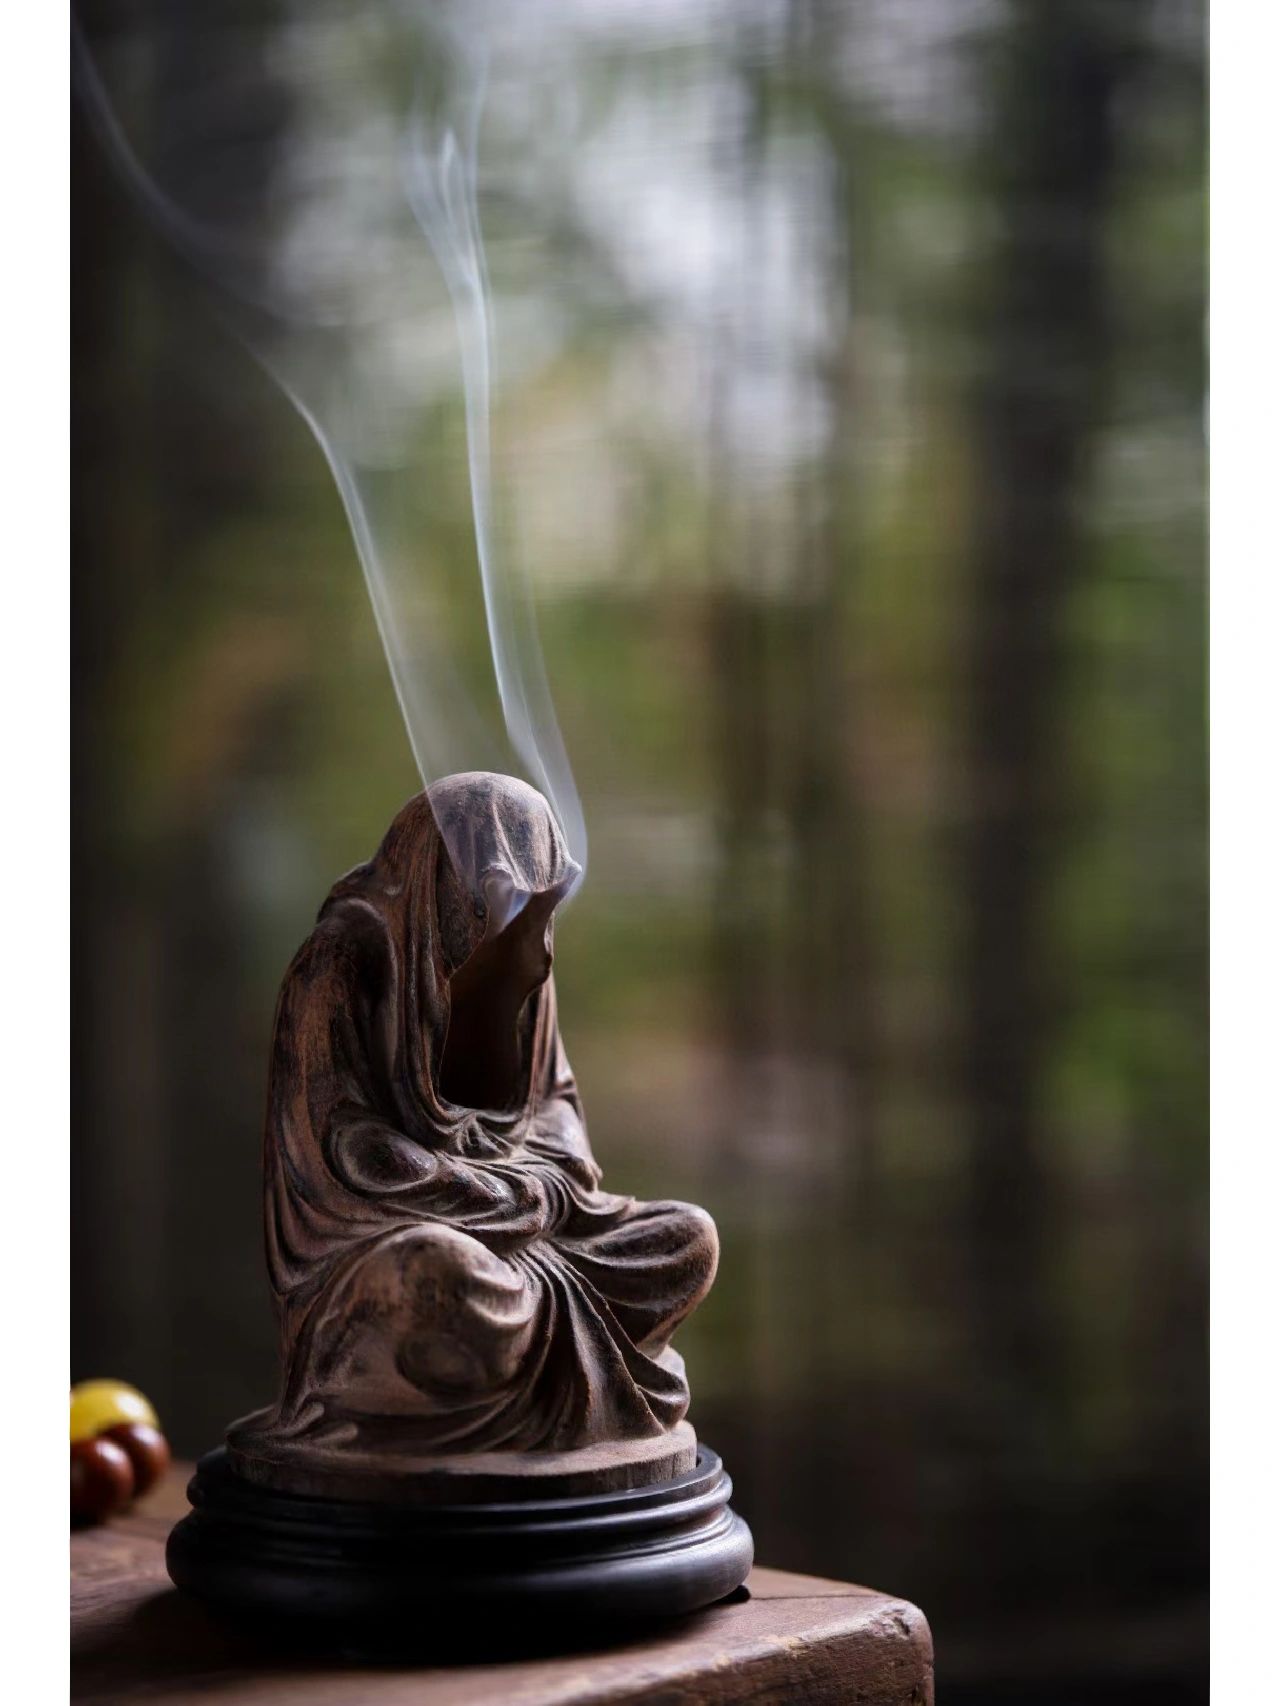 The ceramic Zen-style incense holder